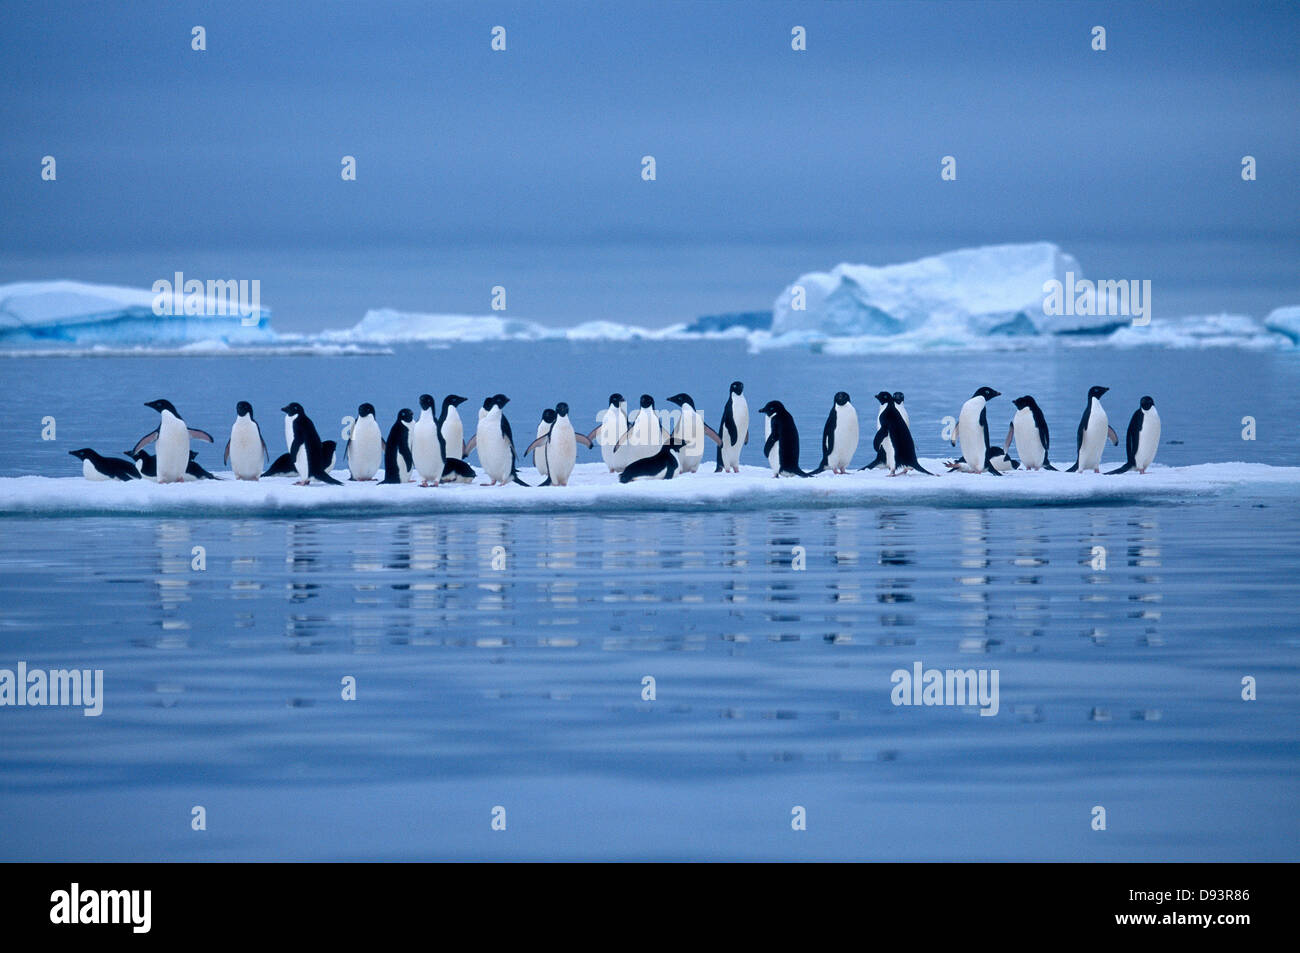 Penguins on ice foe. Stock Photo